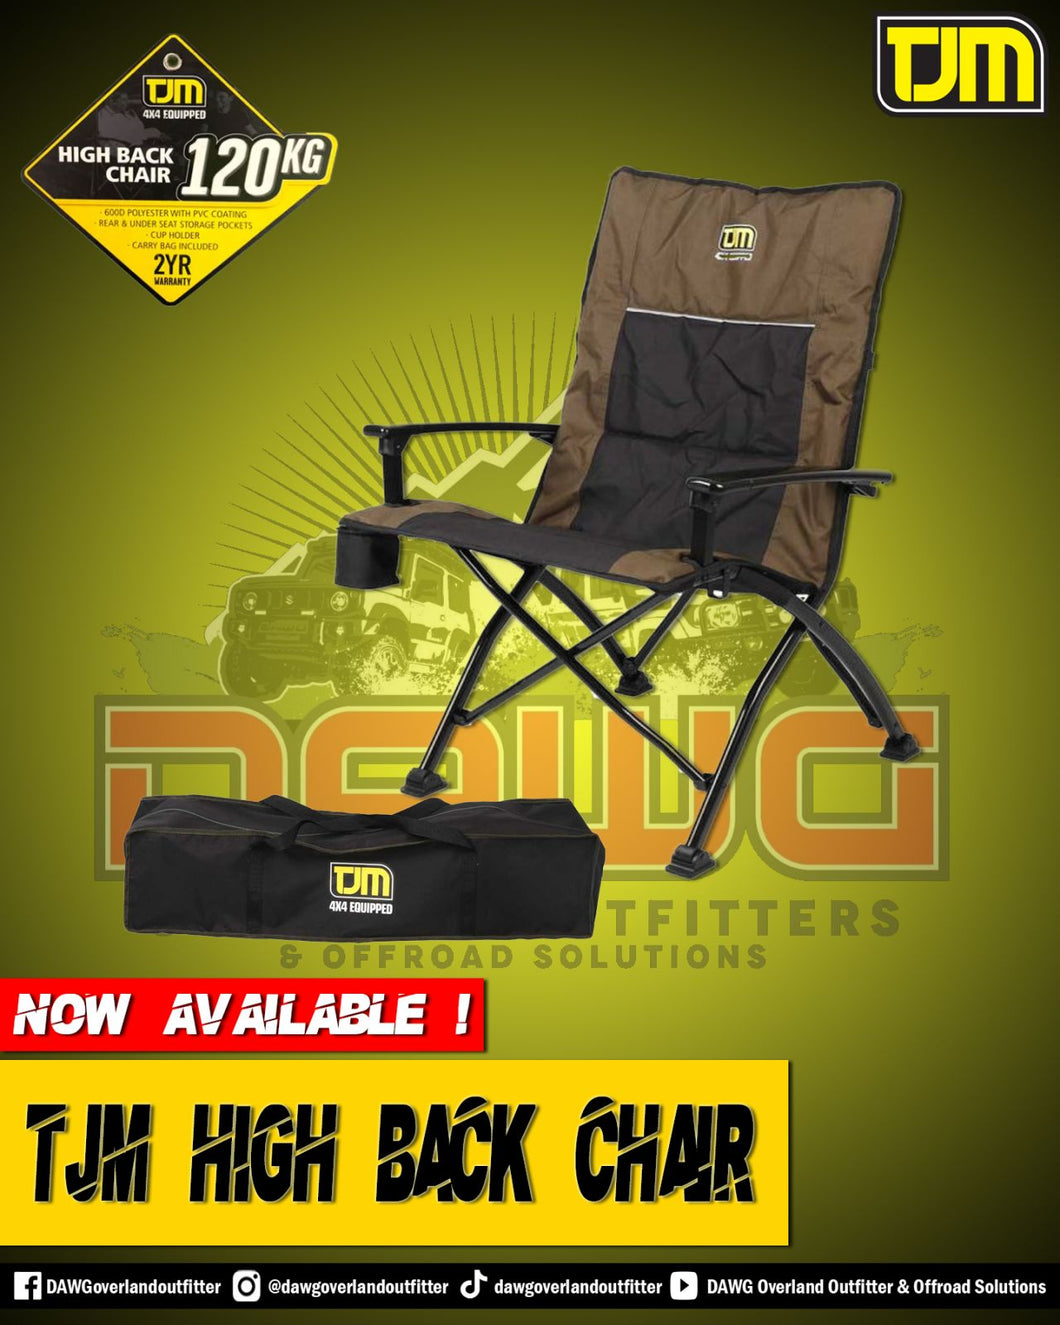 TJM High Back Chair